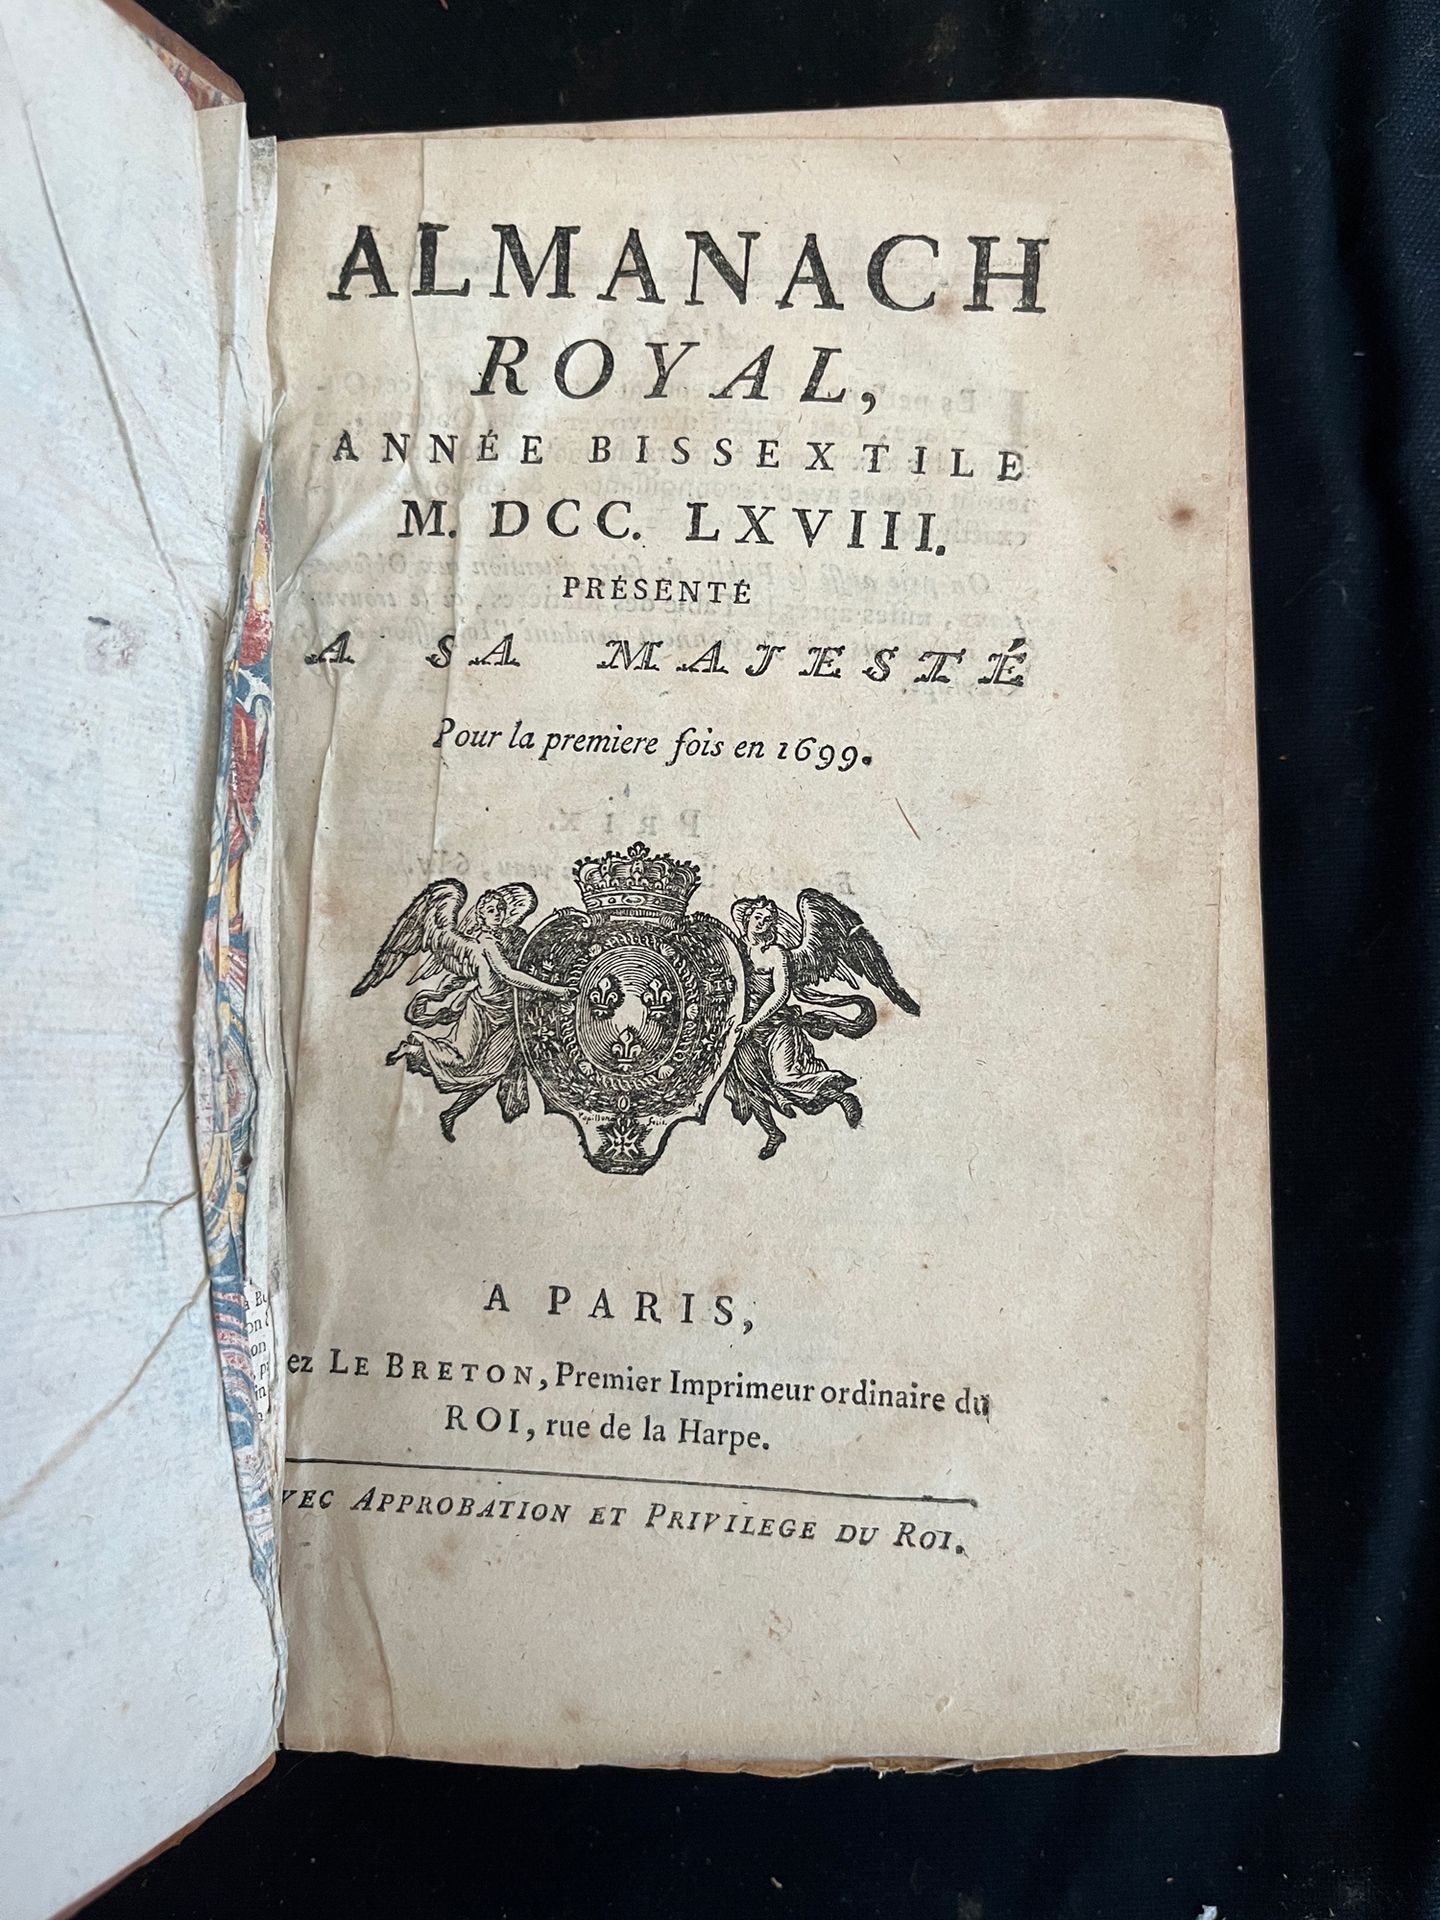 Null [ALMANACH]
Almanach royal pour l'an bissextile MDCCLXVIII (Königlicher Alma&hellip;